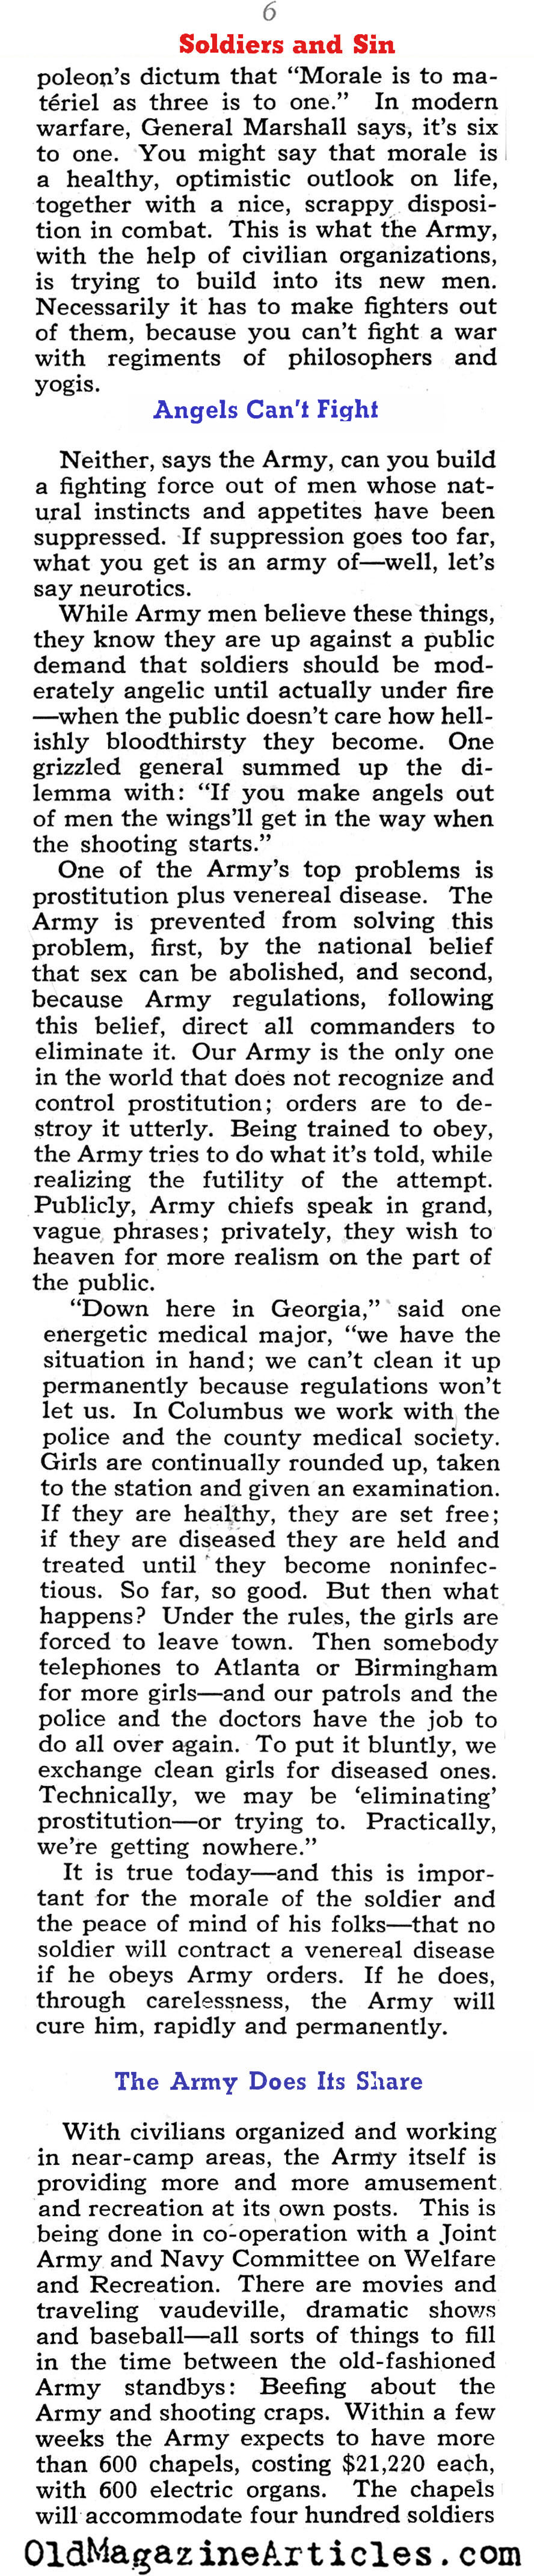 Debauchery Near the Army Camps (Collier's Magazine, 1941)